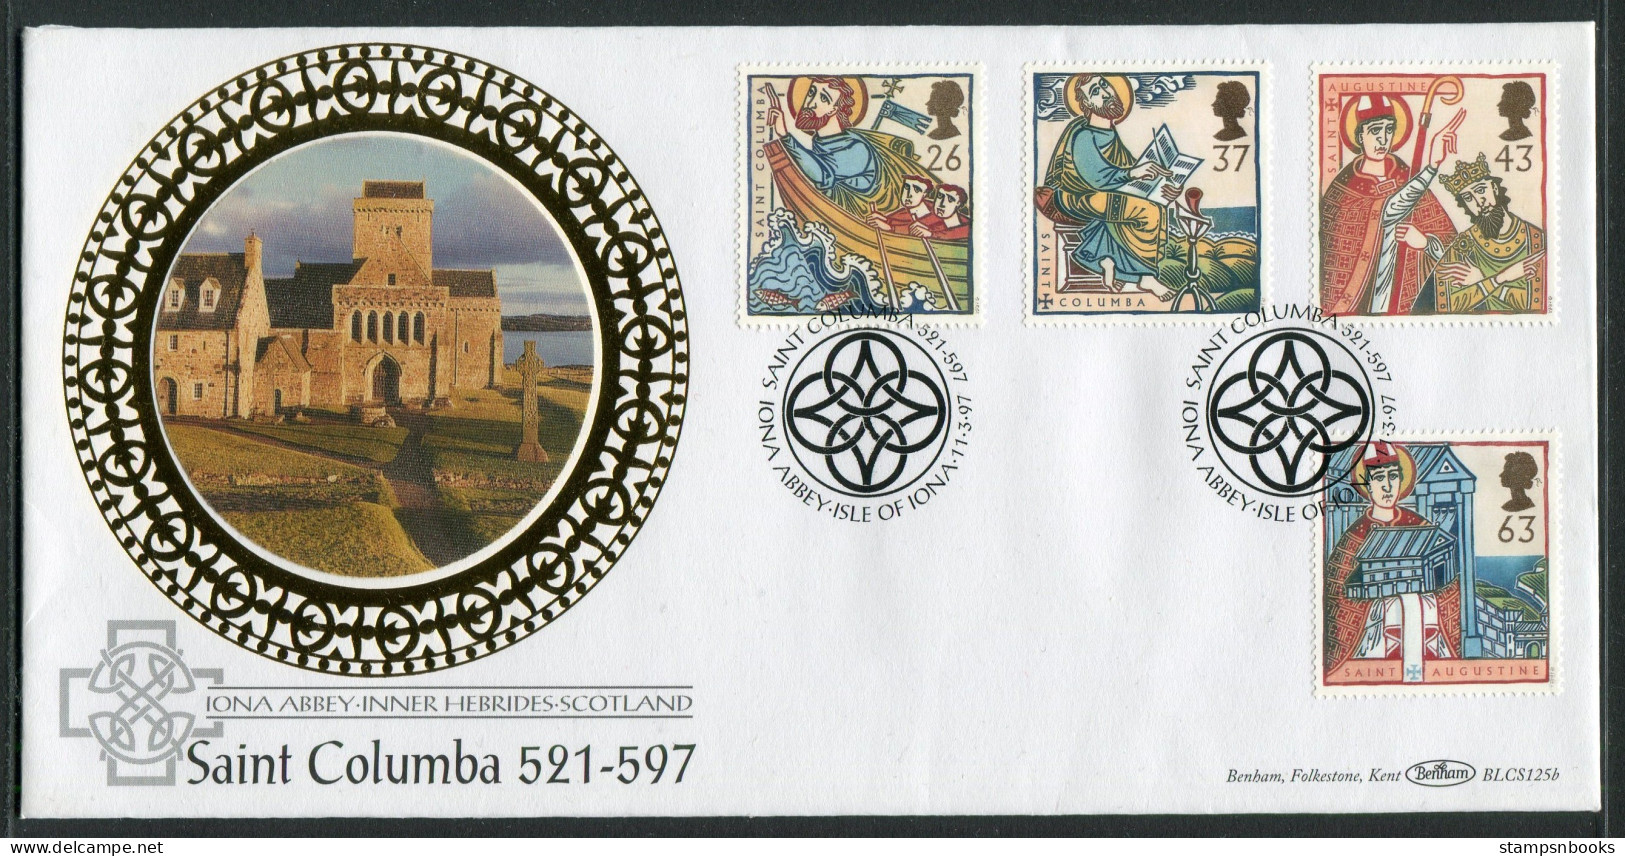 1997 GB Missions Of Faith First Day Cover, Saint Columba, Iona Abbey, Scotland Benham BLCS 125b FDC - 1991-00 Ediciones Decimales